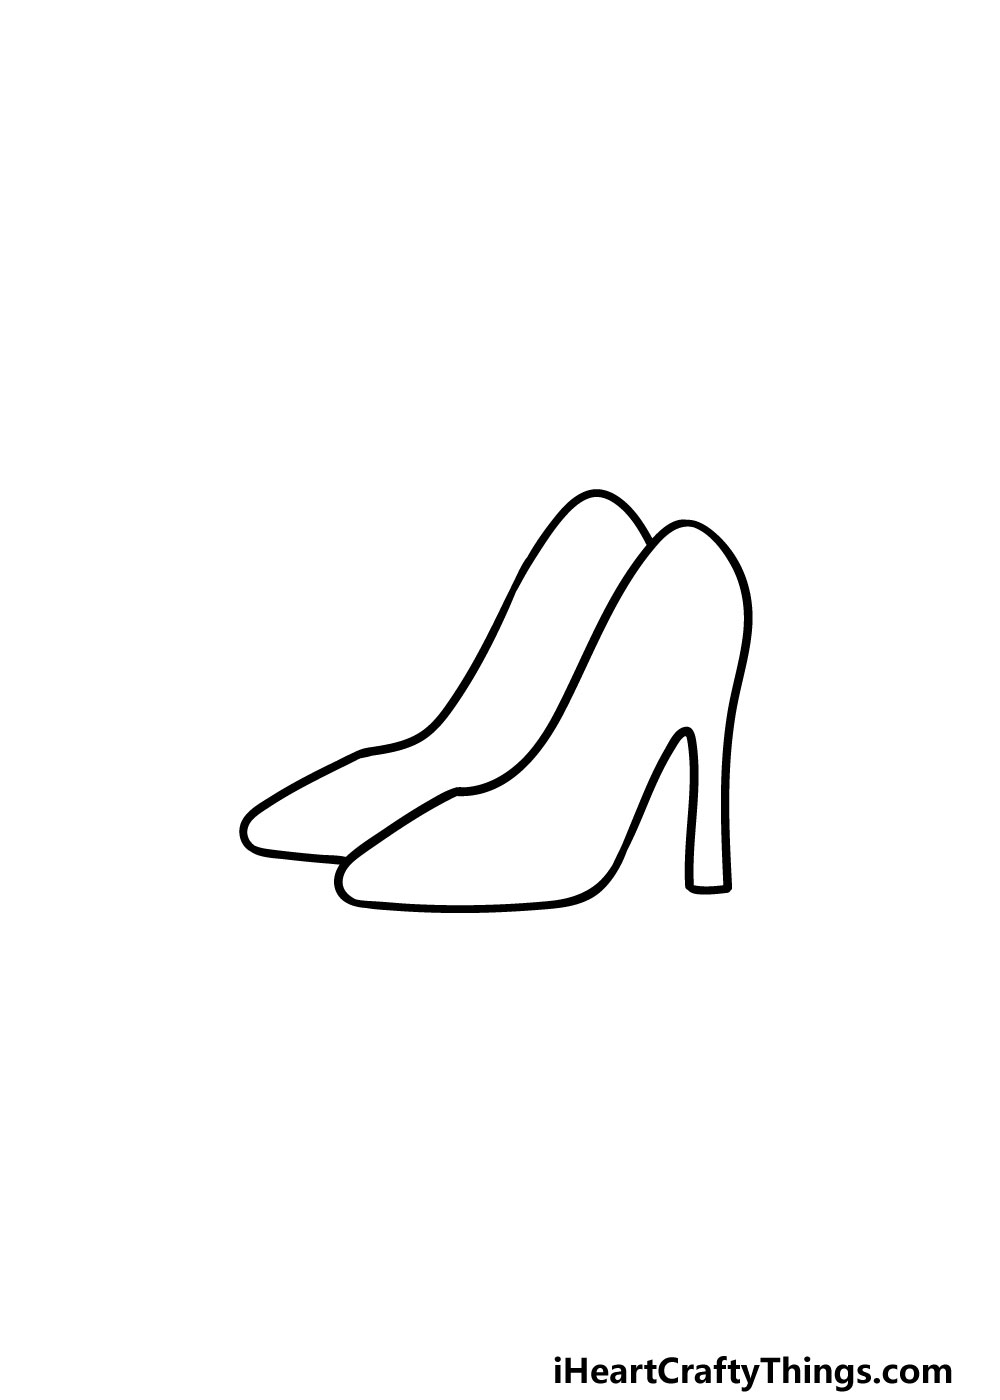 How Do You Draw A High Heel Shoe?